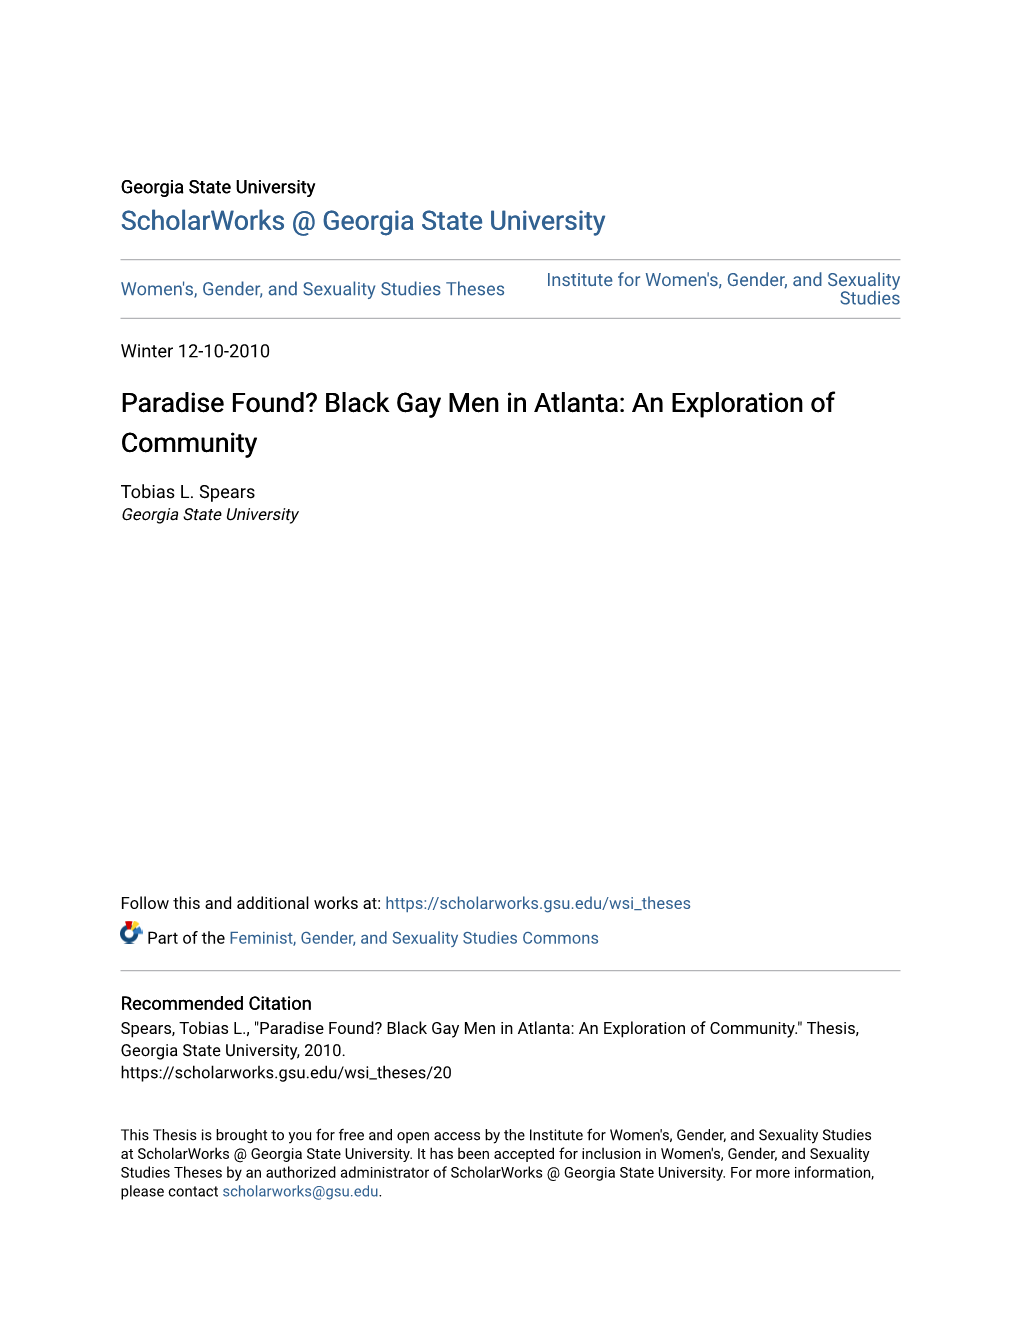 Black Gay Men in Atlanta: an Exploration of Community